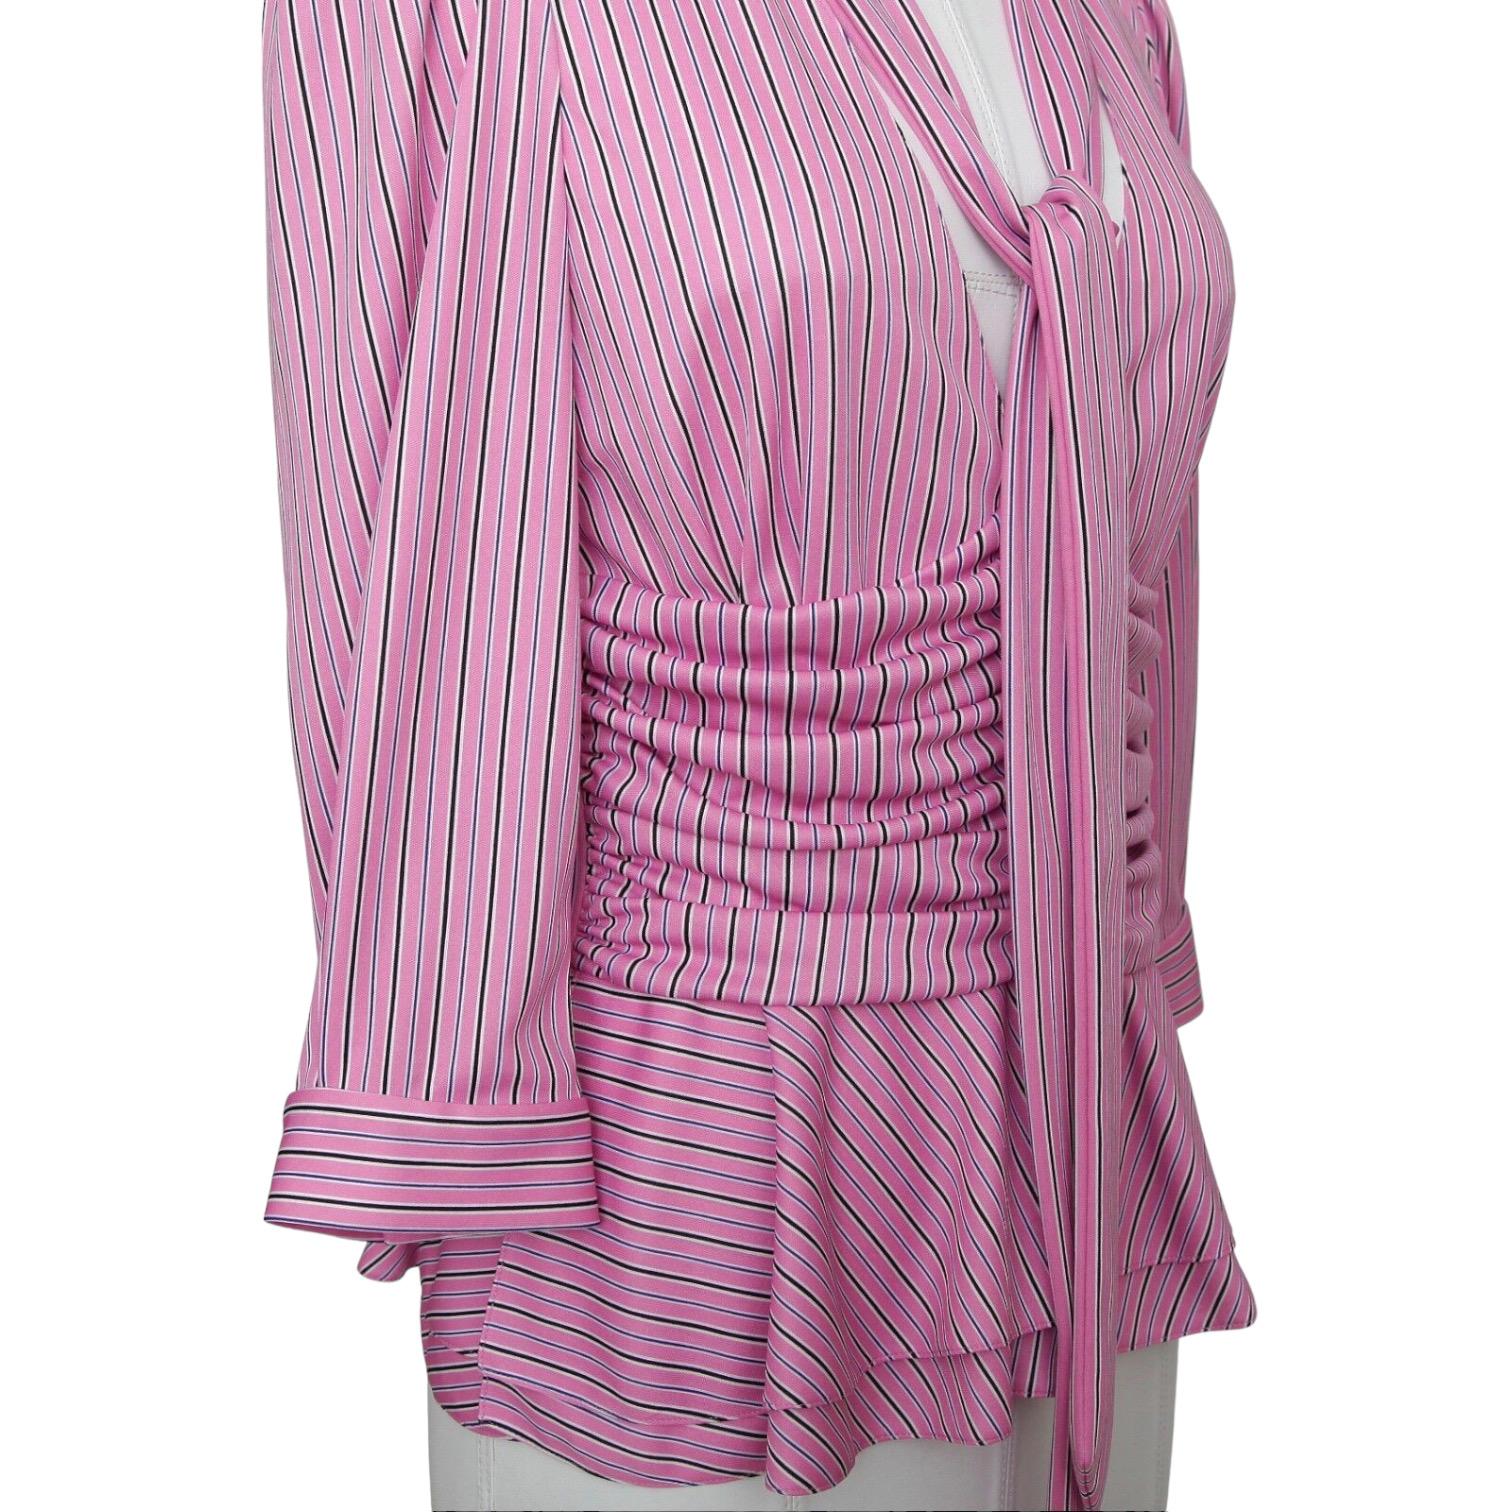 BALENCIAGA Striped Top Shirt Blouse 3/4 Sleeve Neck Tie Rose White Black 38 NWT For Sale 1